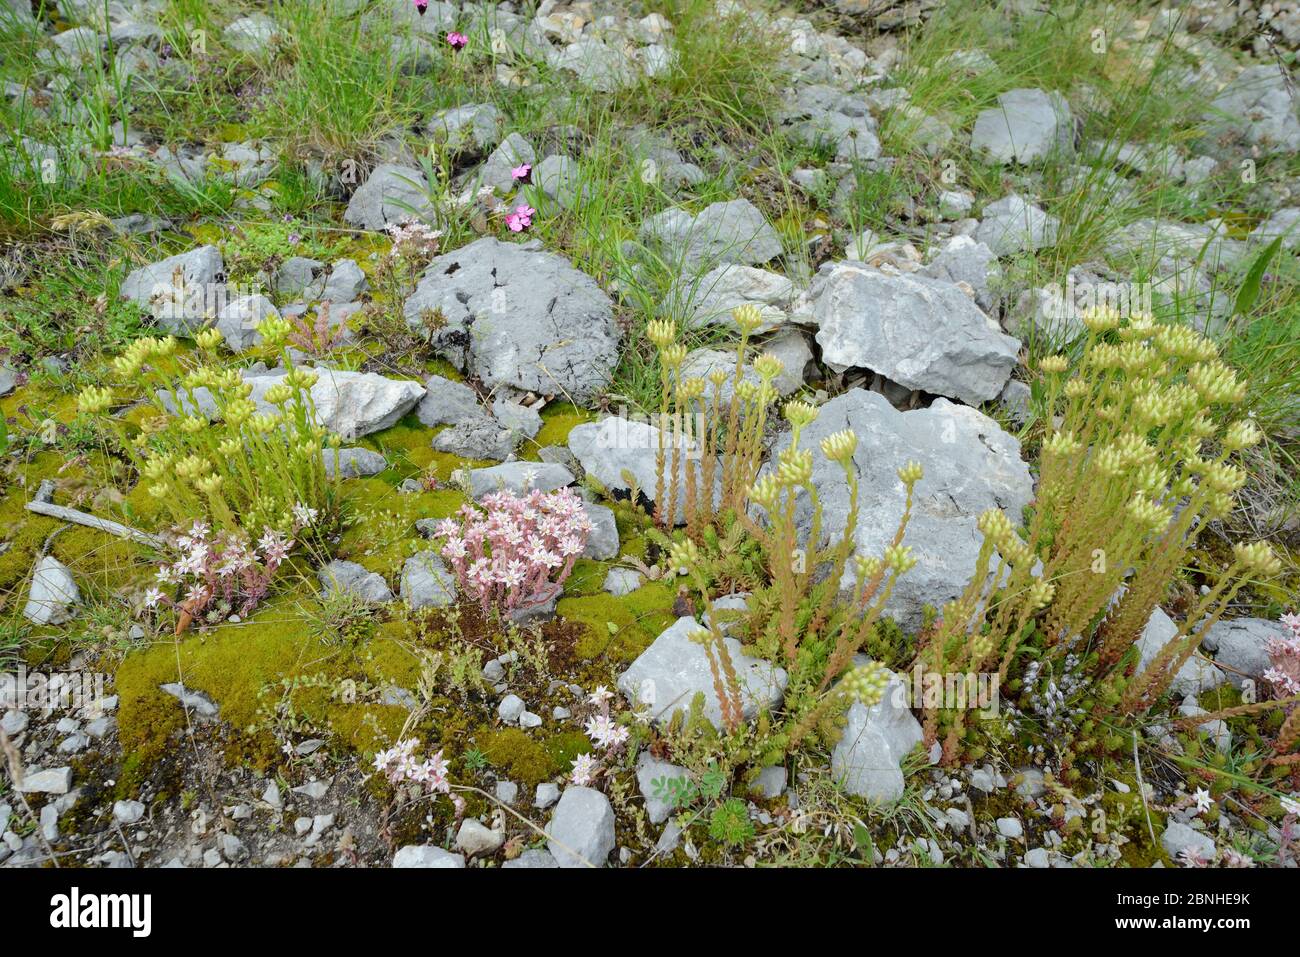 European stonecrop (Sedum ochroleucum) and Spanish stonecrop (Sedum hispanicum) clumps flowering among limestone rocks and scree on Mount Maglic, Sutj Stock Photo